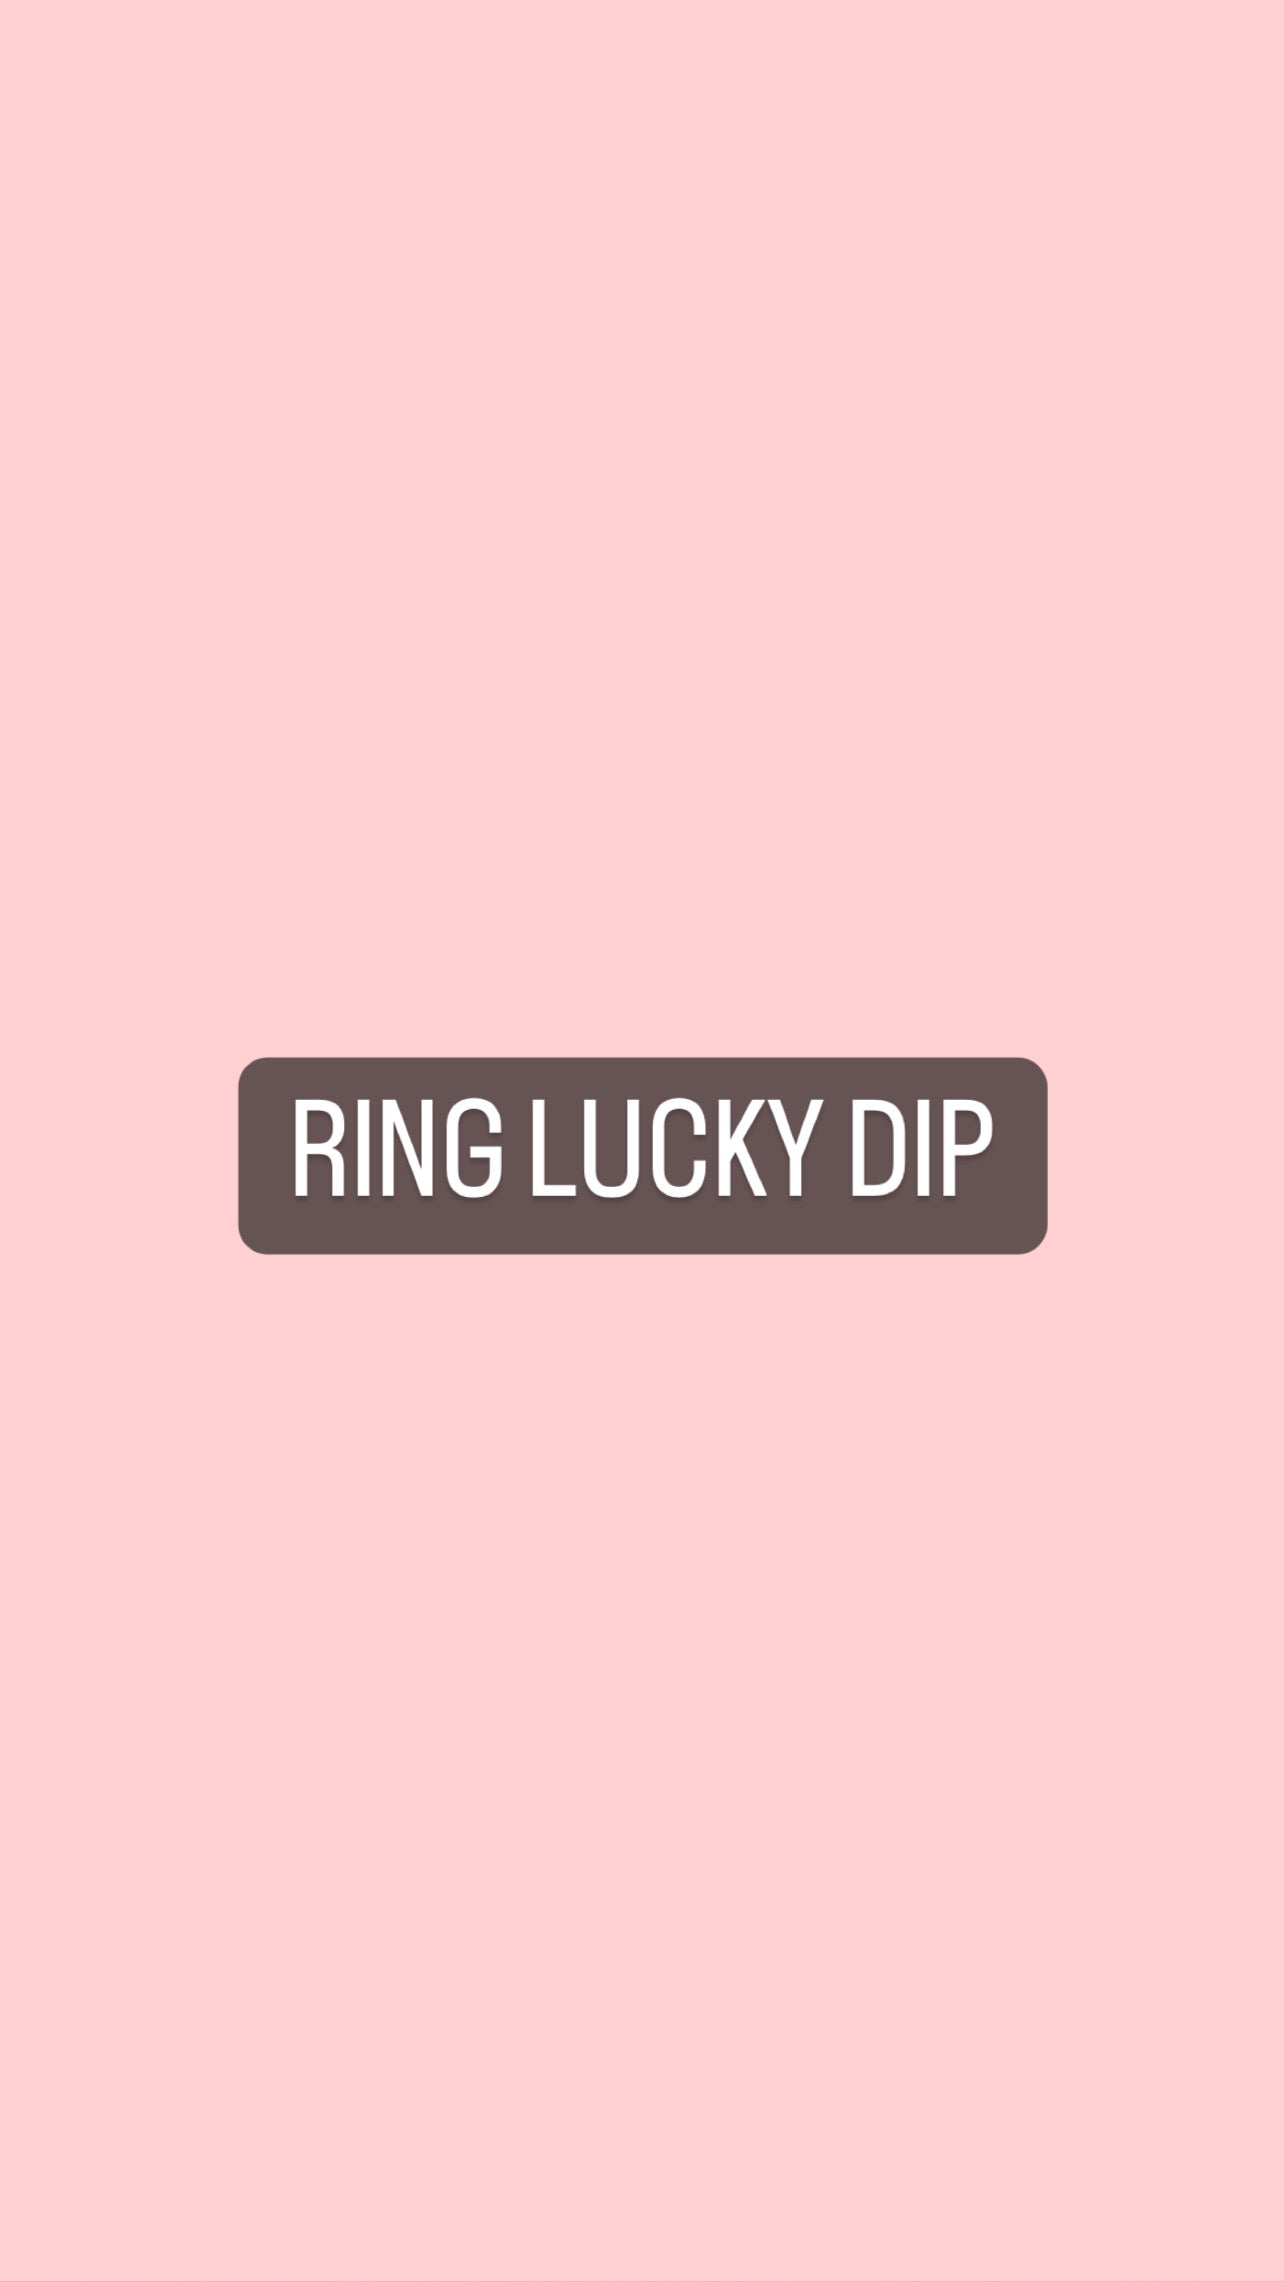 RING LUCKY DIP